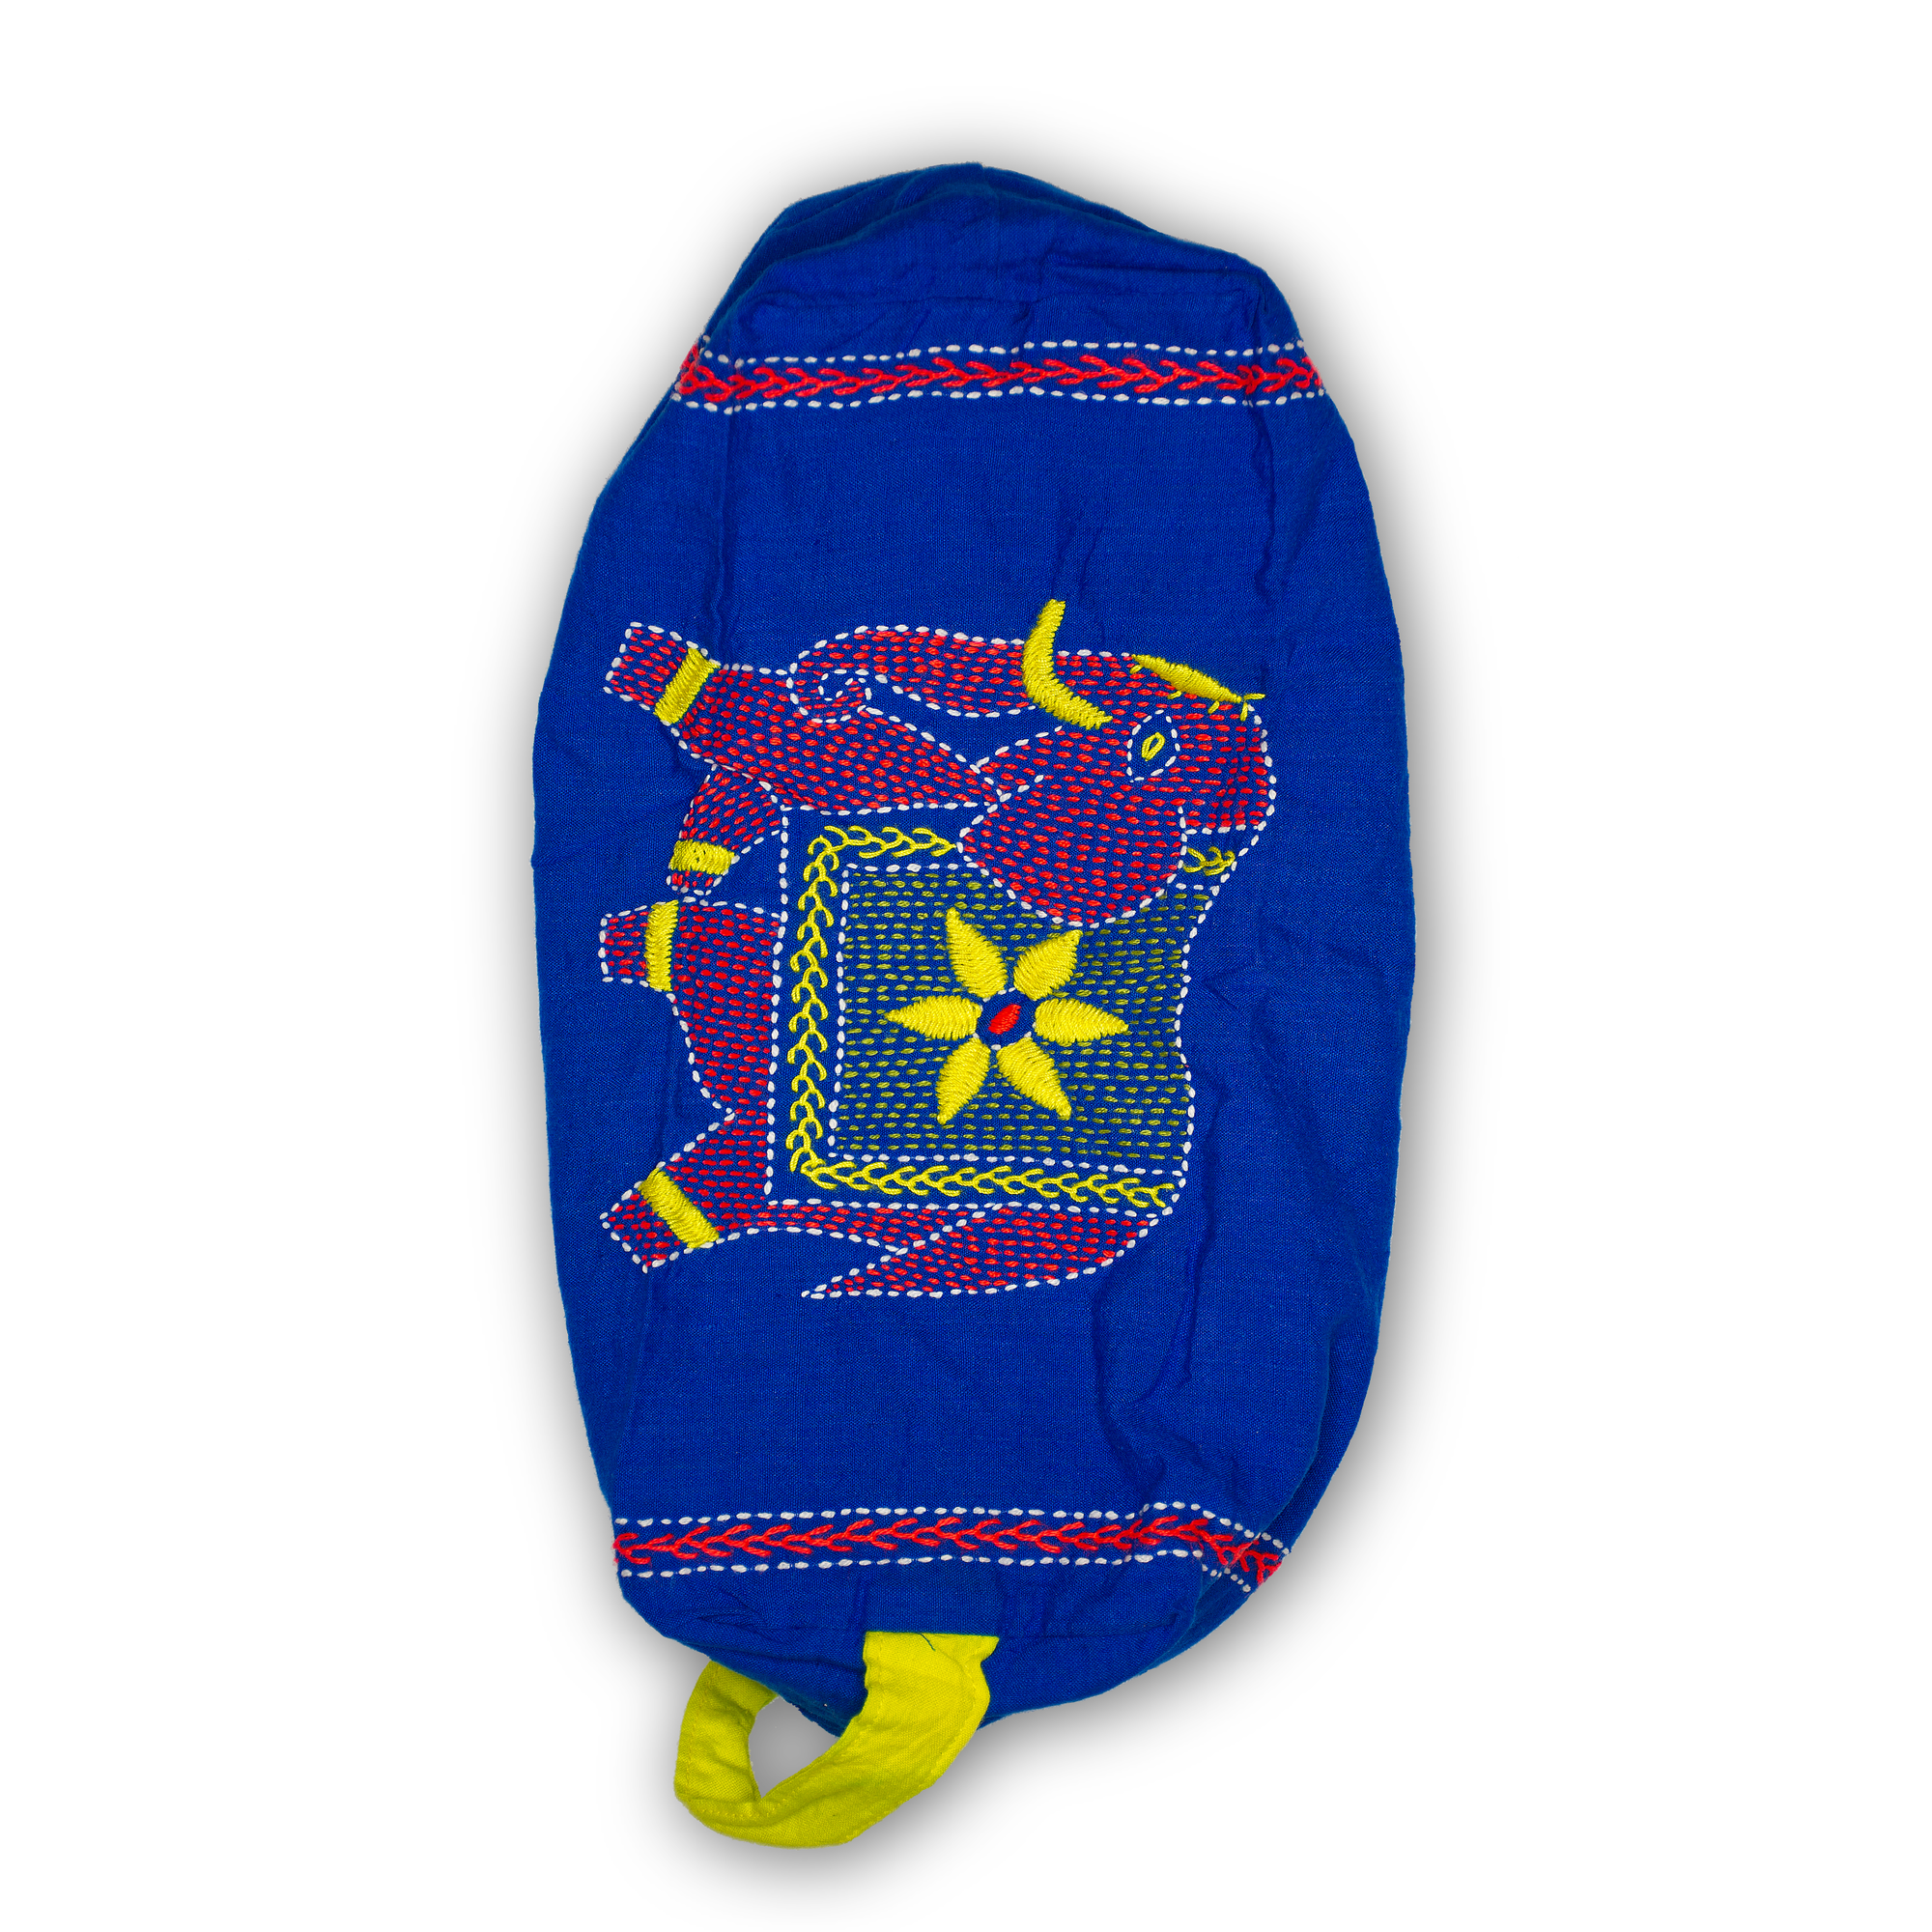 Pouch Bags - Dinajpur (elephant) Design - Suraiya (dark blue) / Asha (yellow)